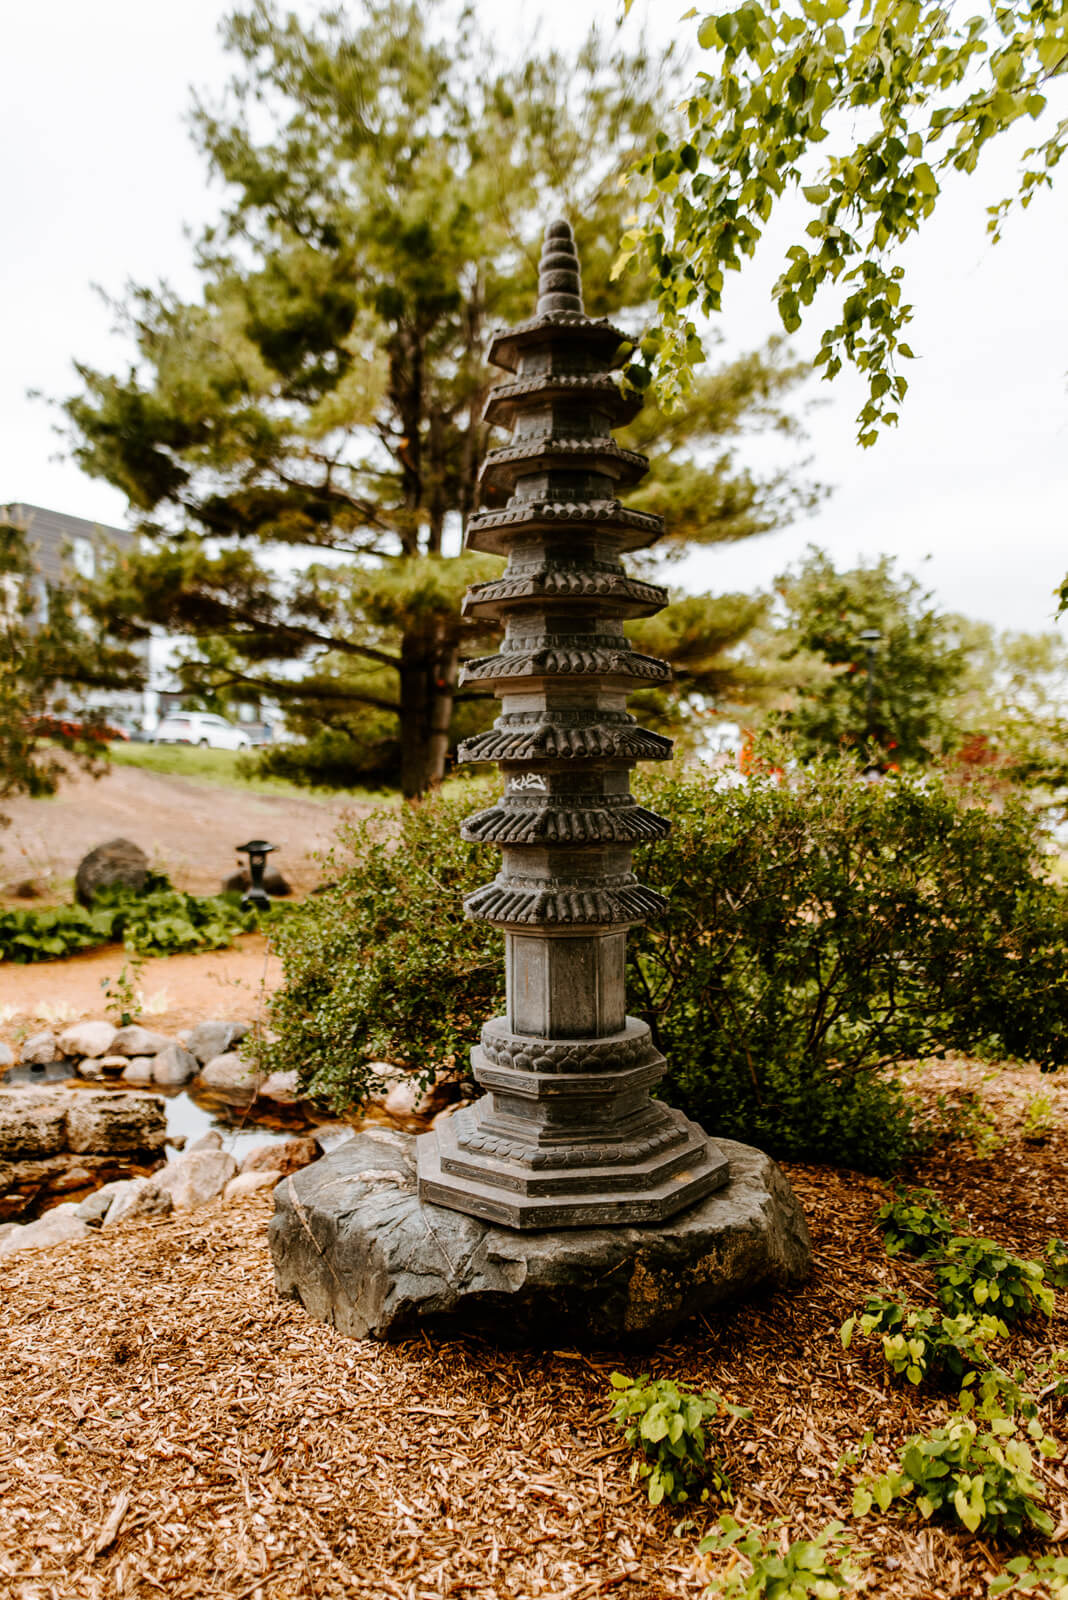 A stone pagoda on a rock within a garden.